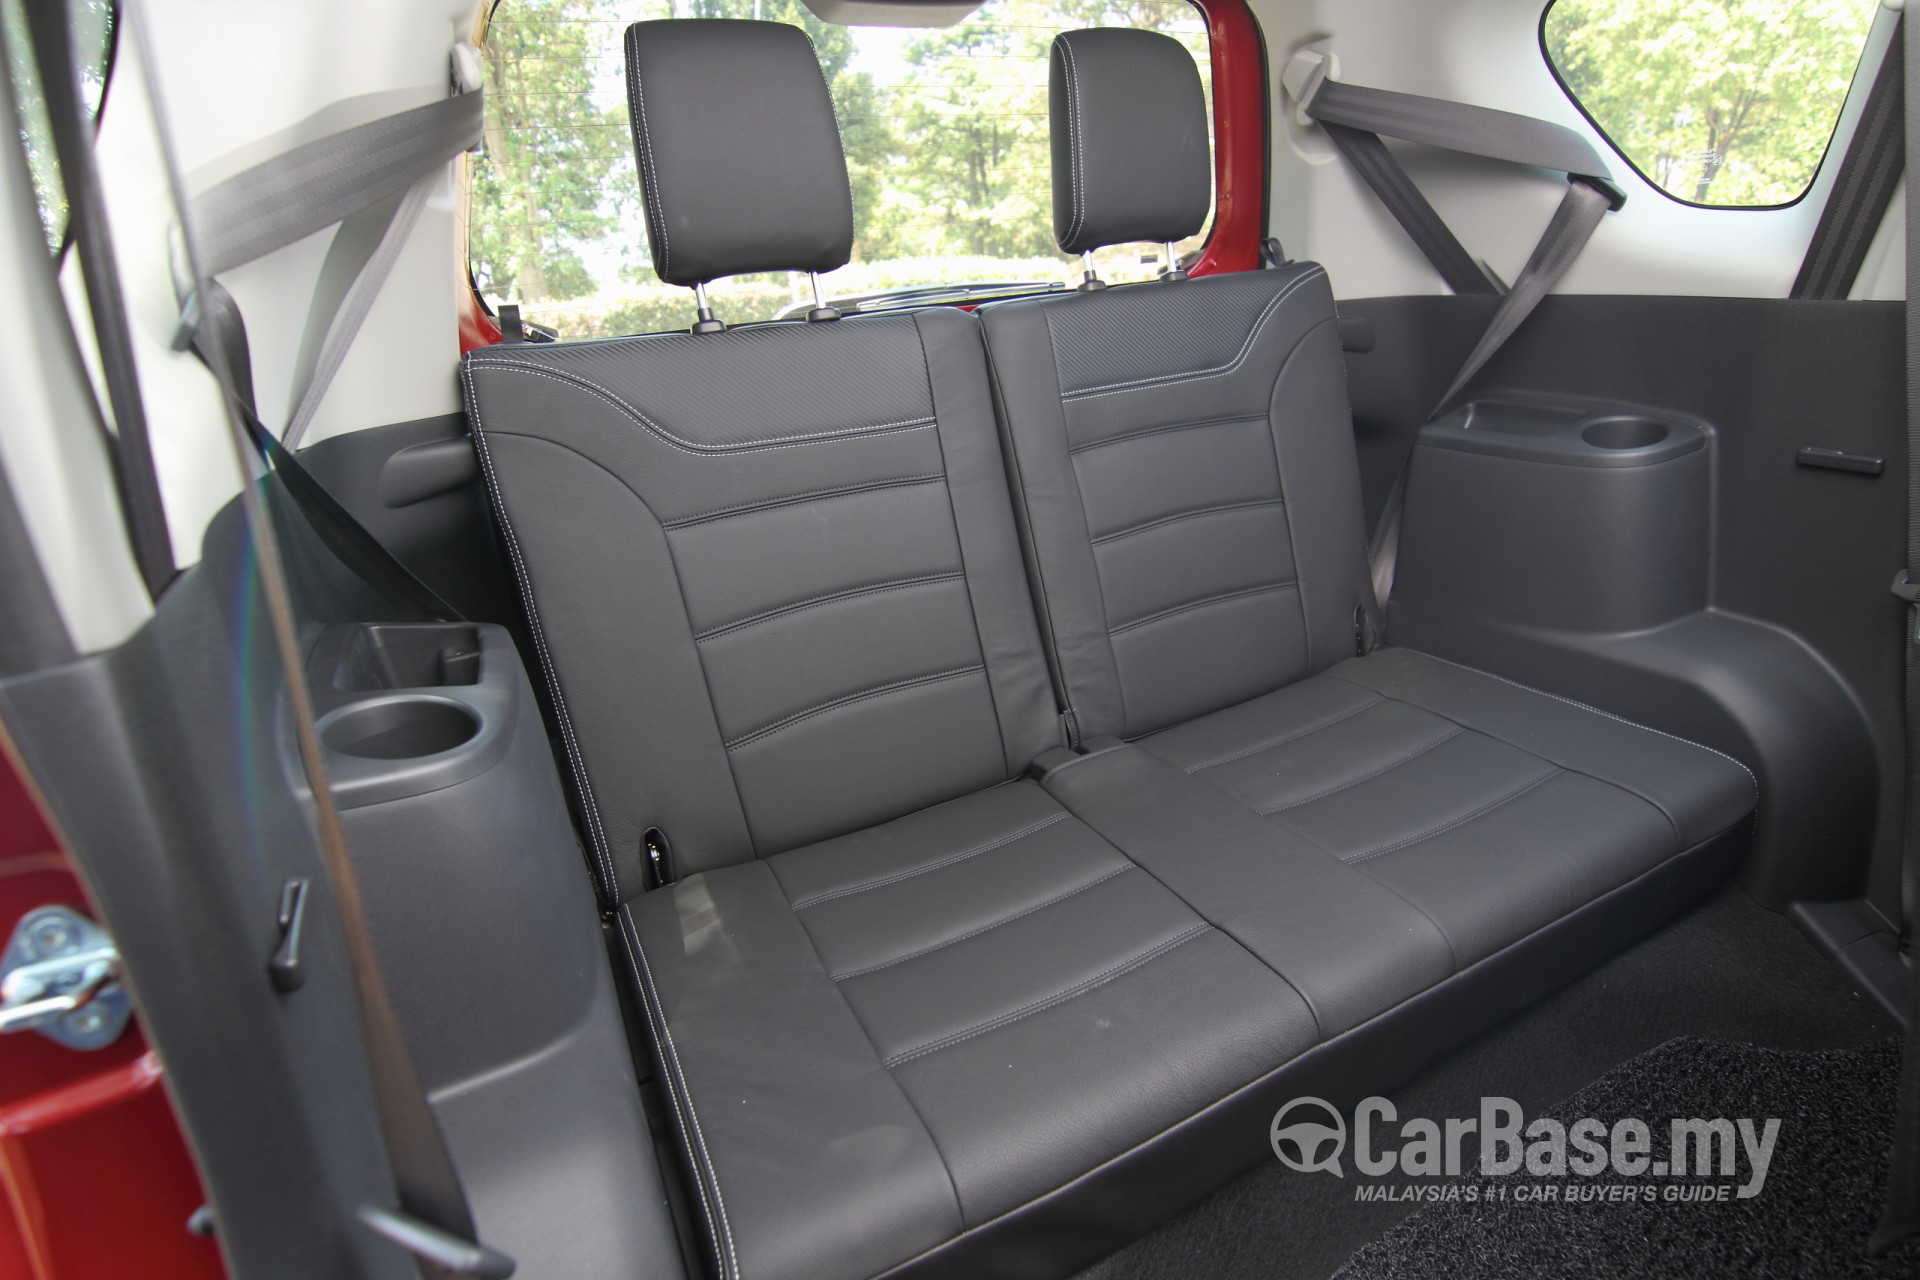 Perodua Alza Mk1 Facelift (2014) Interior Image #8388 in 